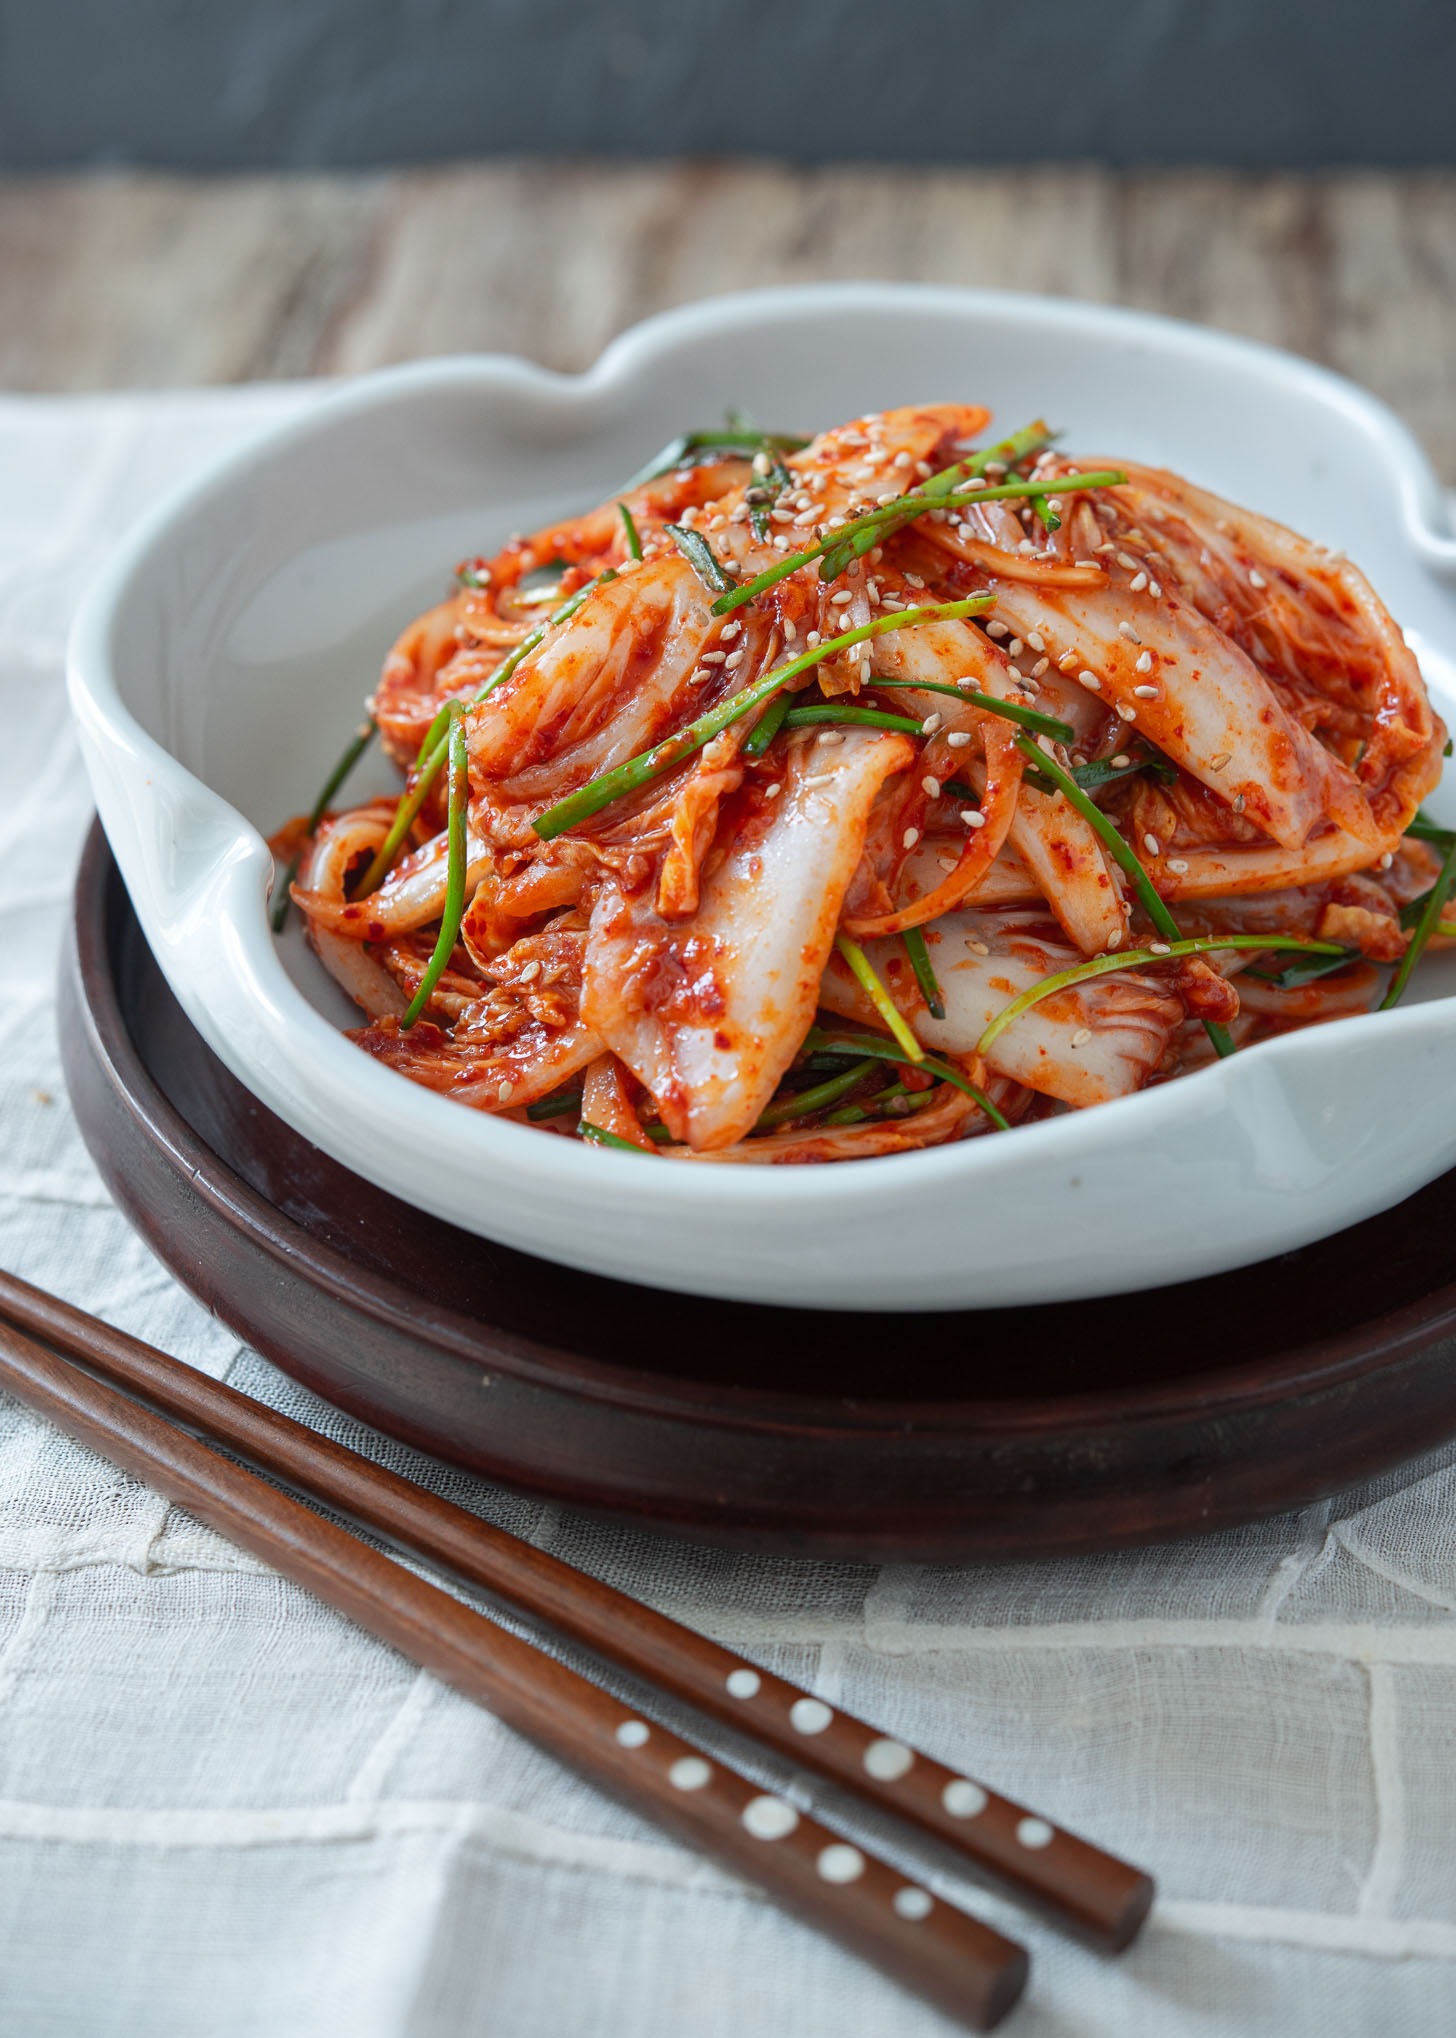 Geotjeori kimchi salad for summer Korean side dish.